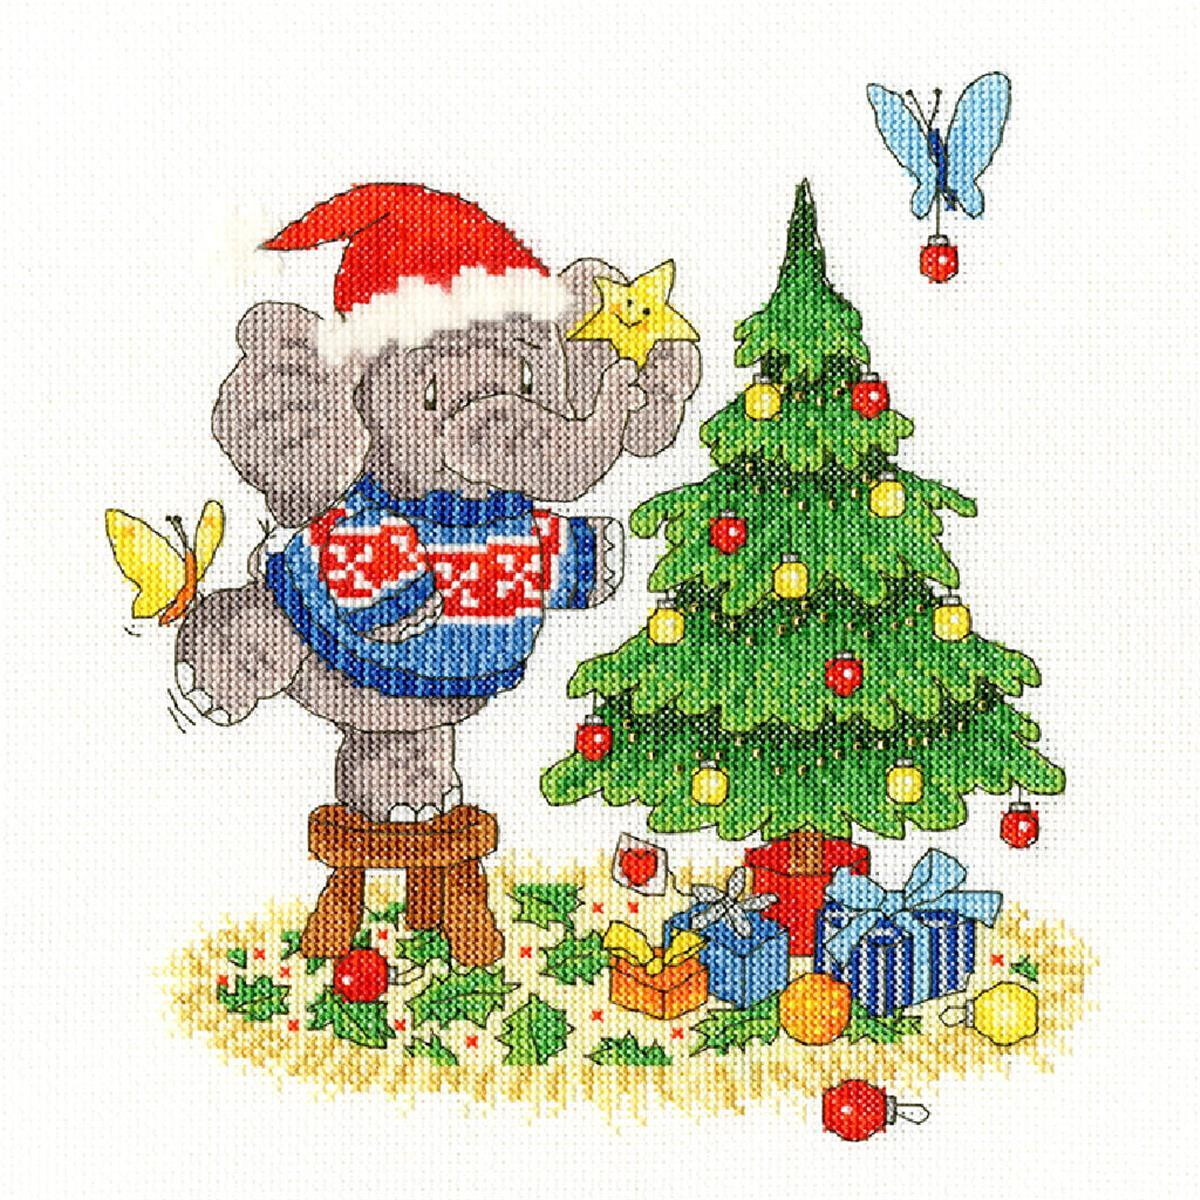 A cross-stitch picture of a festive scene shows a gray...